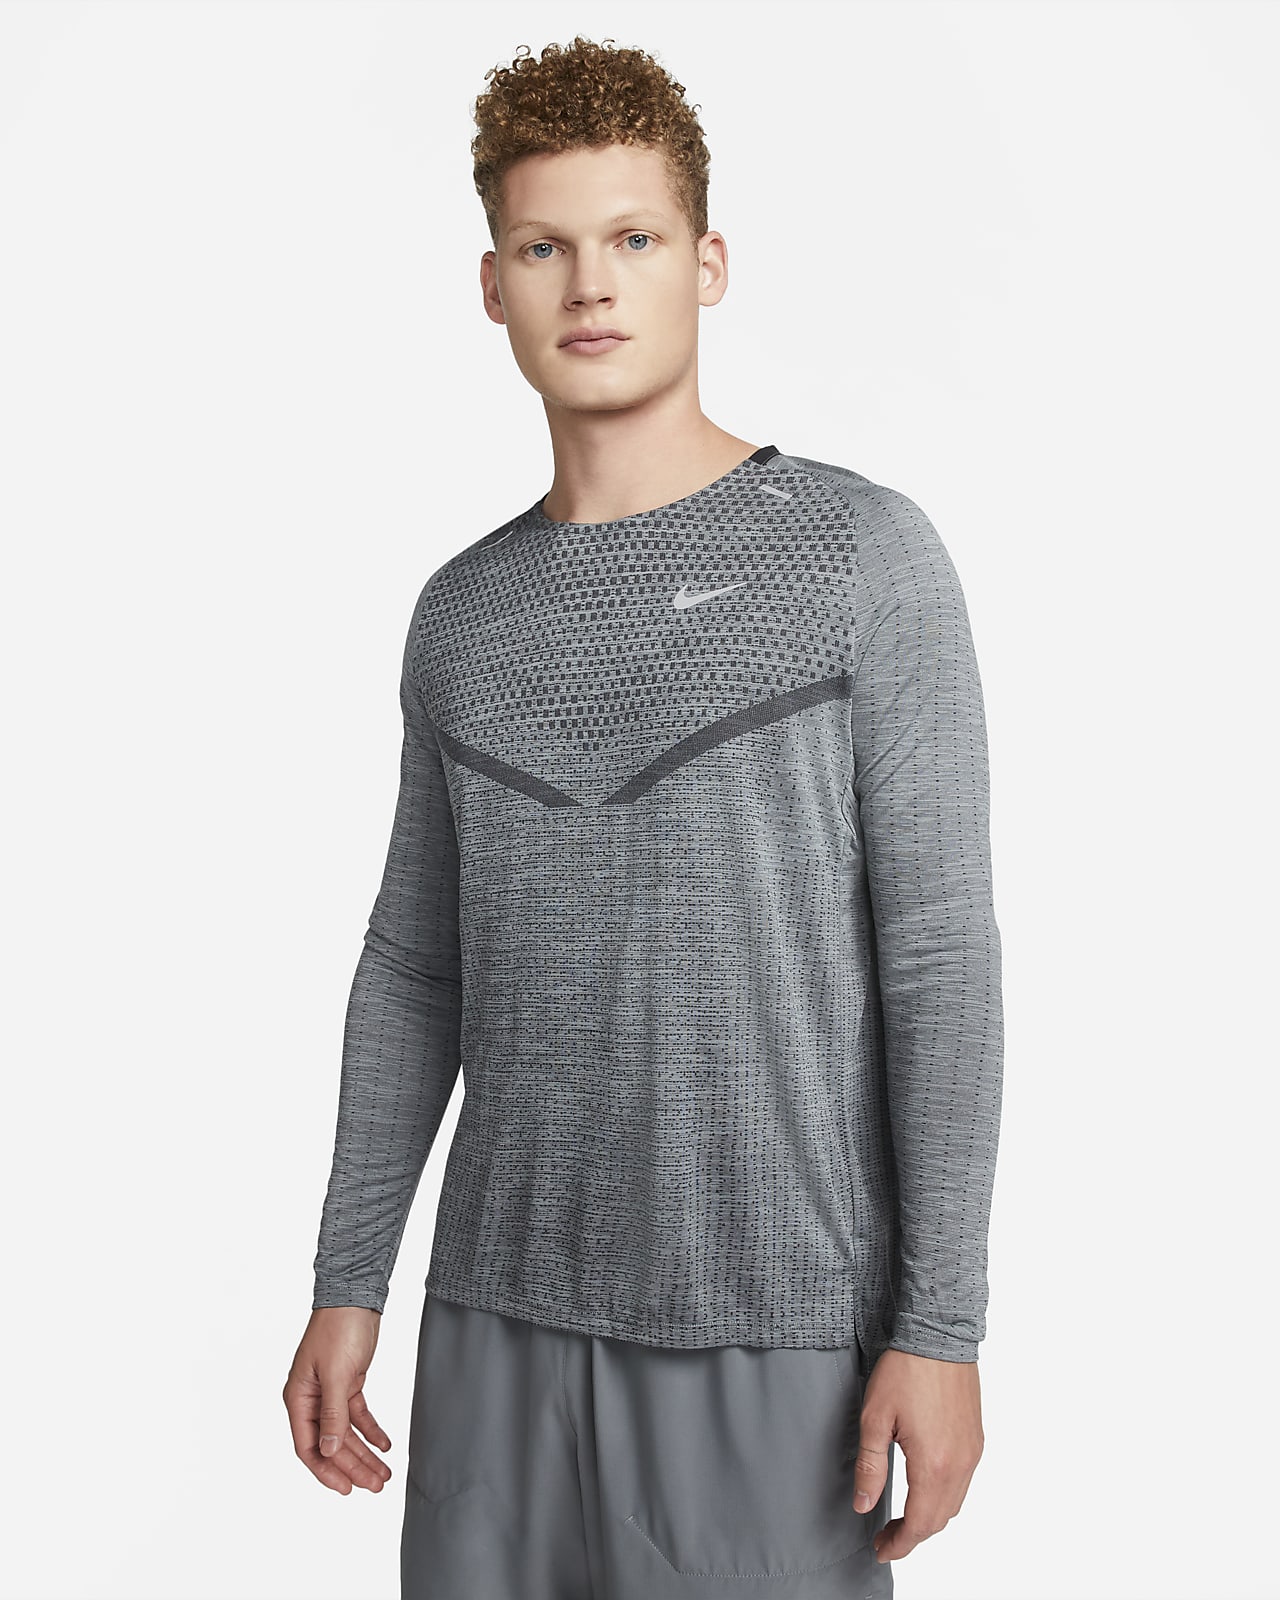 Nike Dri-FIT ADV Techknit Ultra Men's Long-Sleeve Running Top